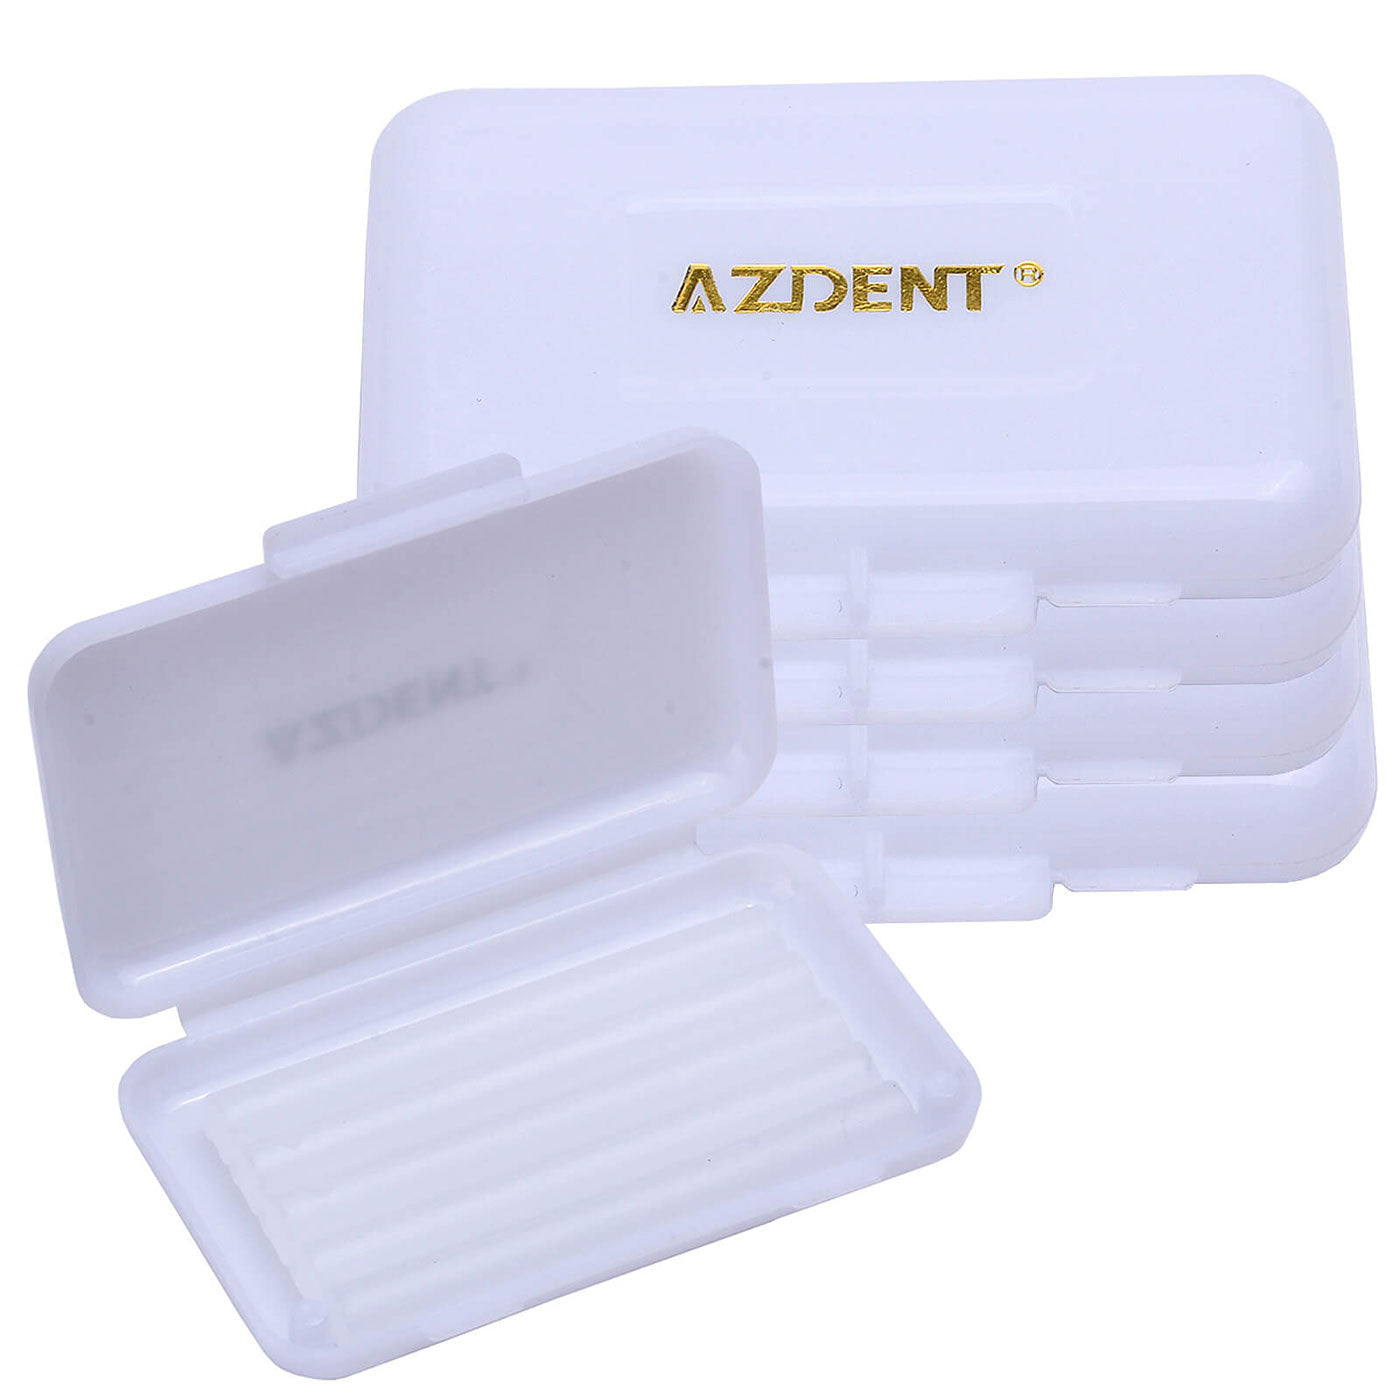 5 Boxes AZDENT Dental Orthodontic Wax Braces Wax 5 Strips/Box Unscented - azdentall.com